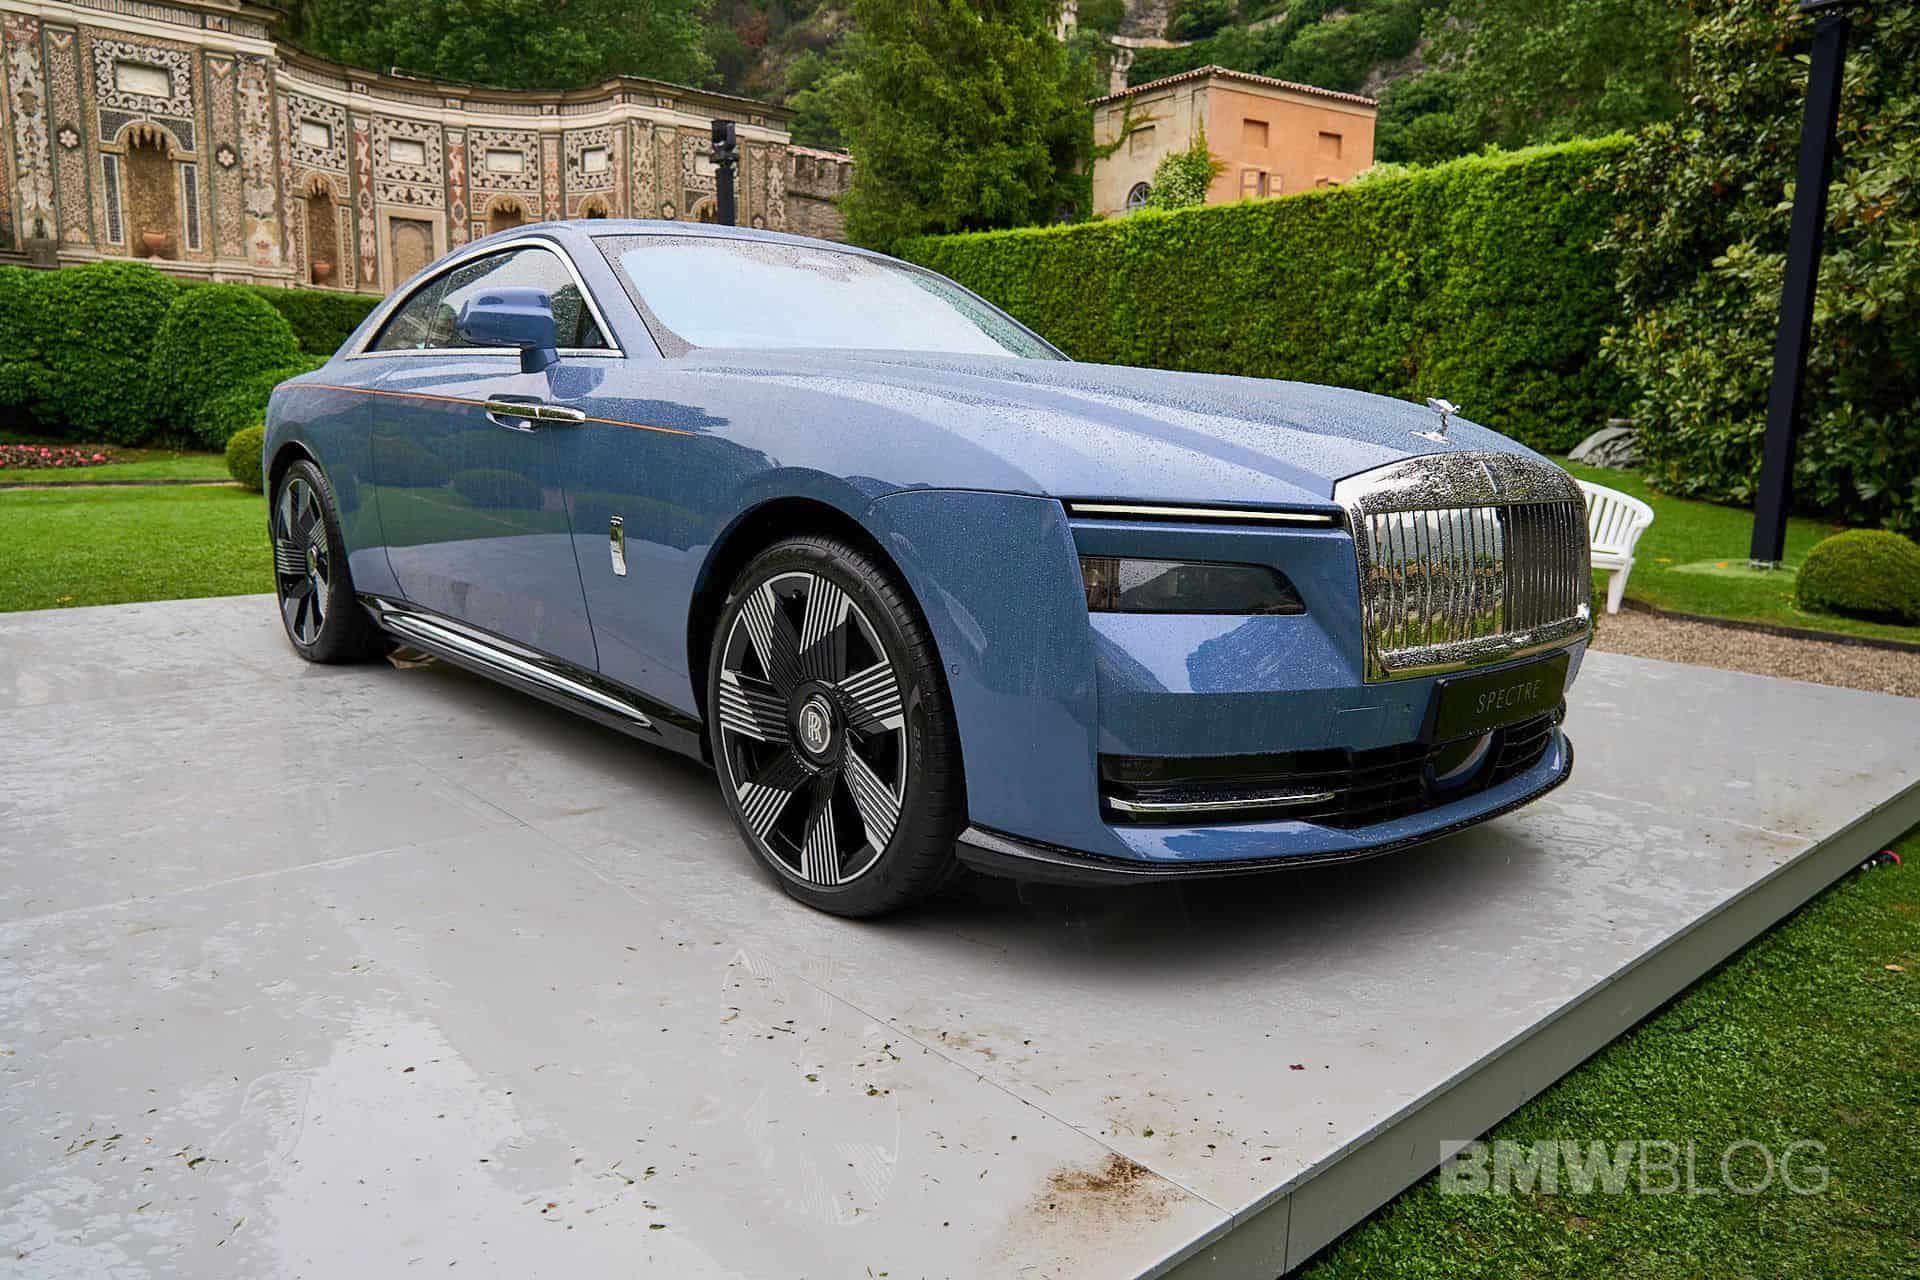 Rolls-Royce Specter shows what a stylish EV looks like at Villa d’Este